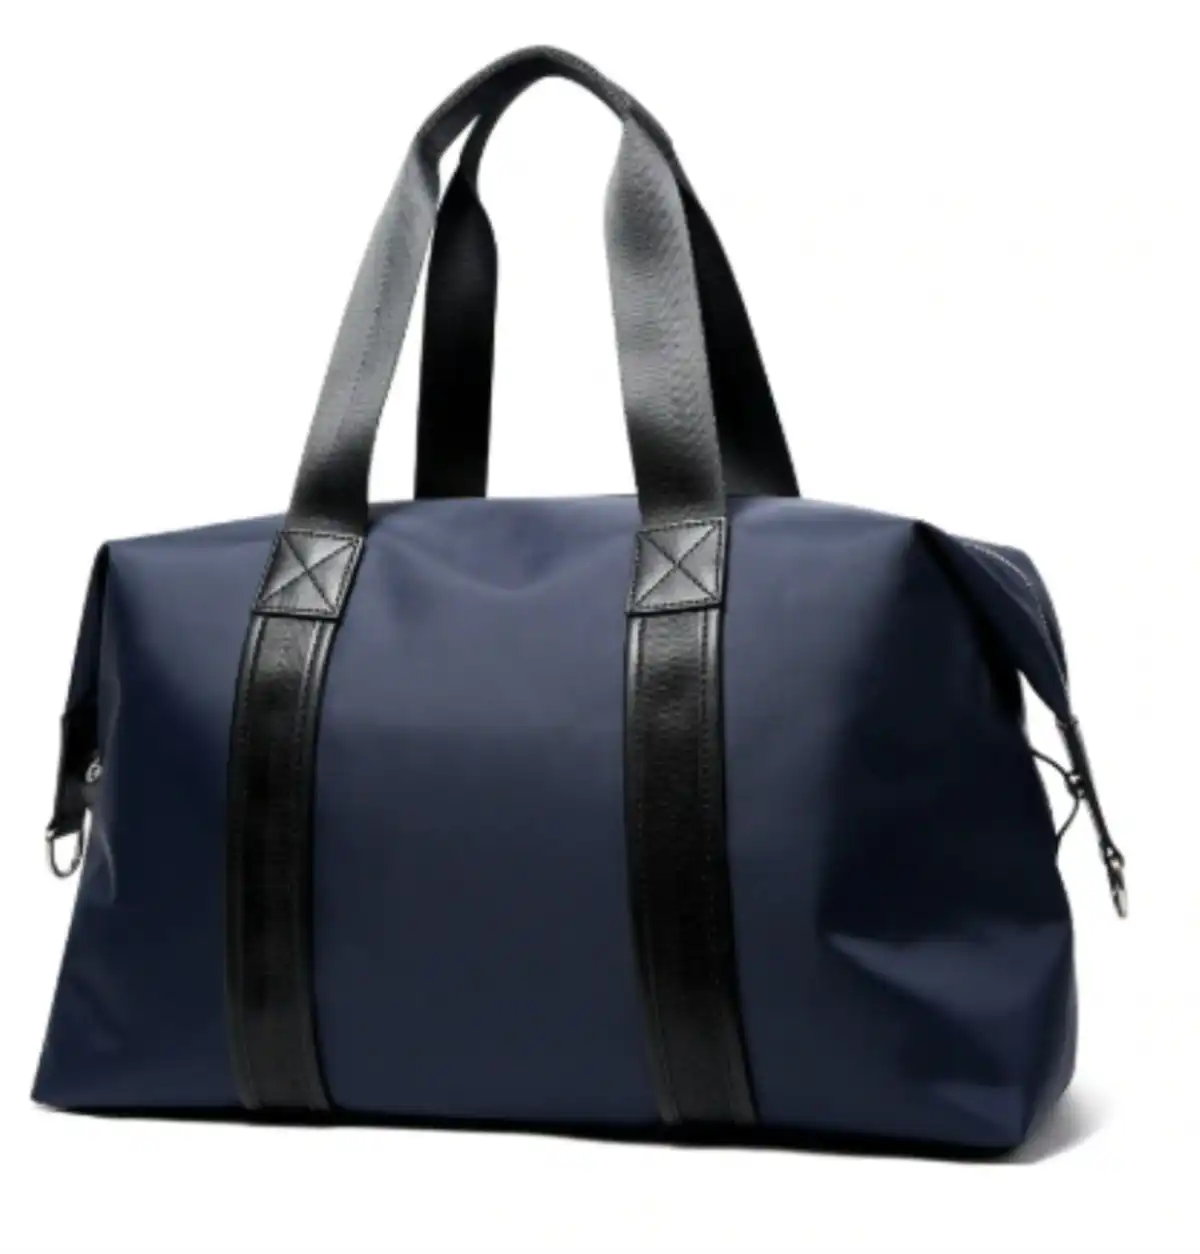 Bopai Luxury Waterproof Foldable Cross-body Travel Gym Sport Duffle Bag Luggage Hand Bag B5432 Blue